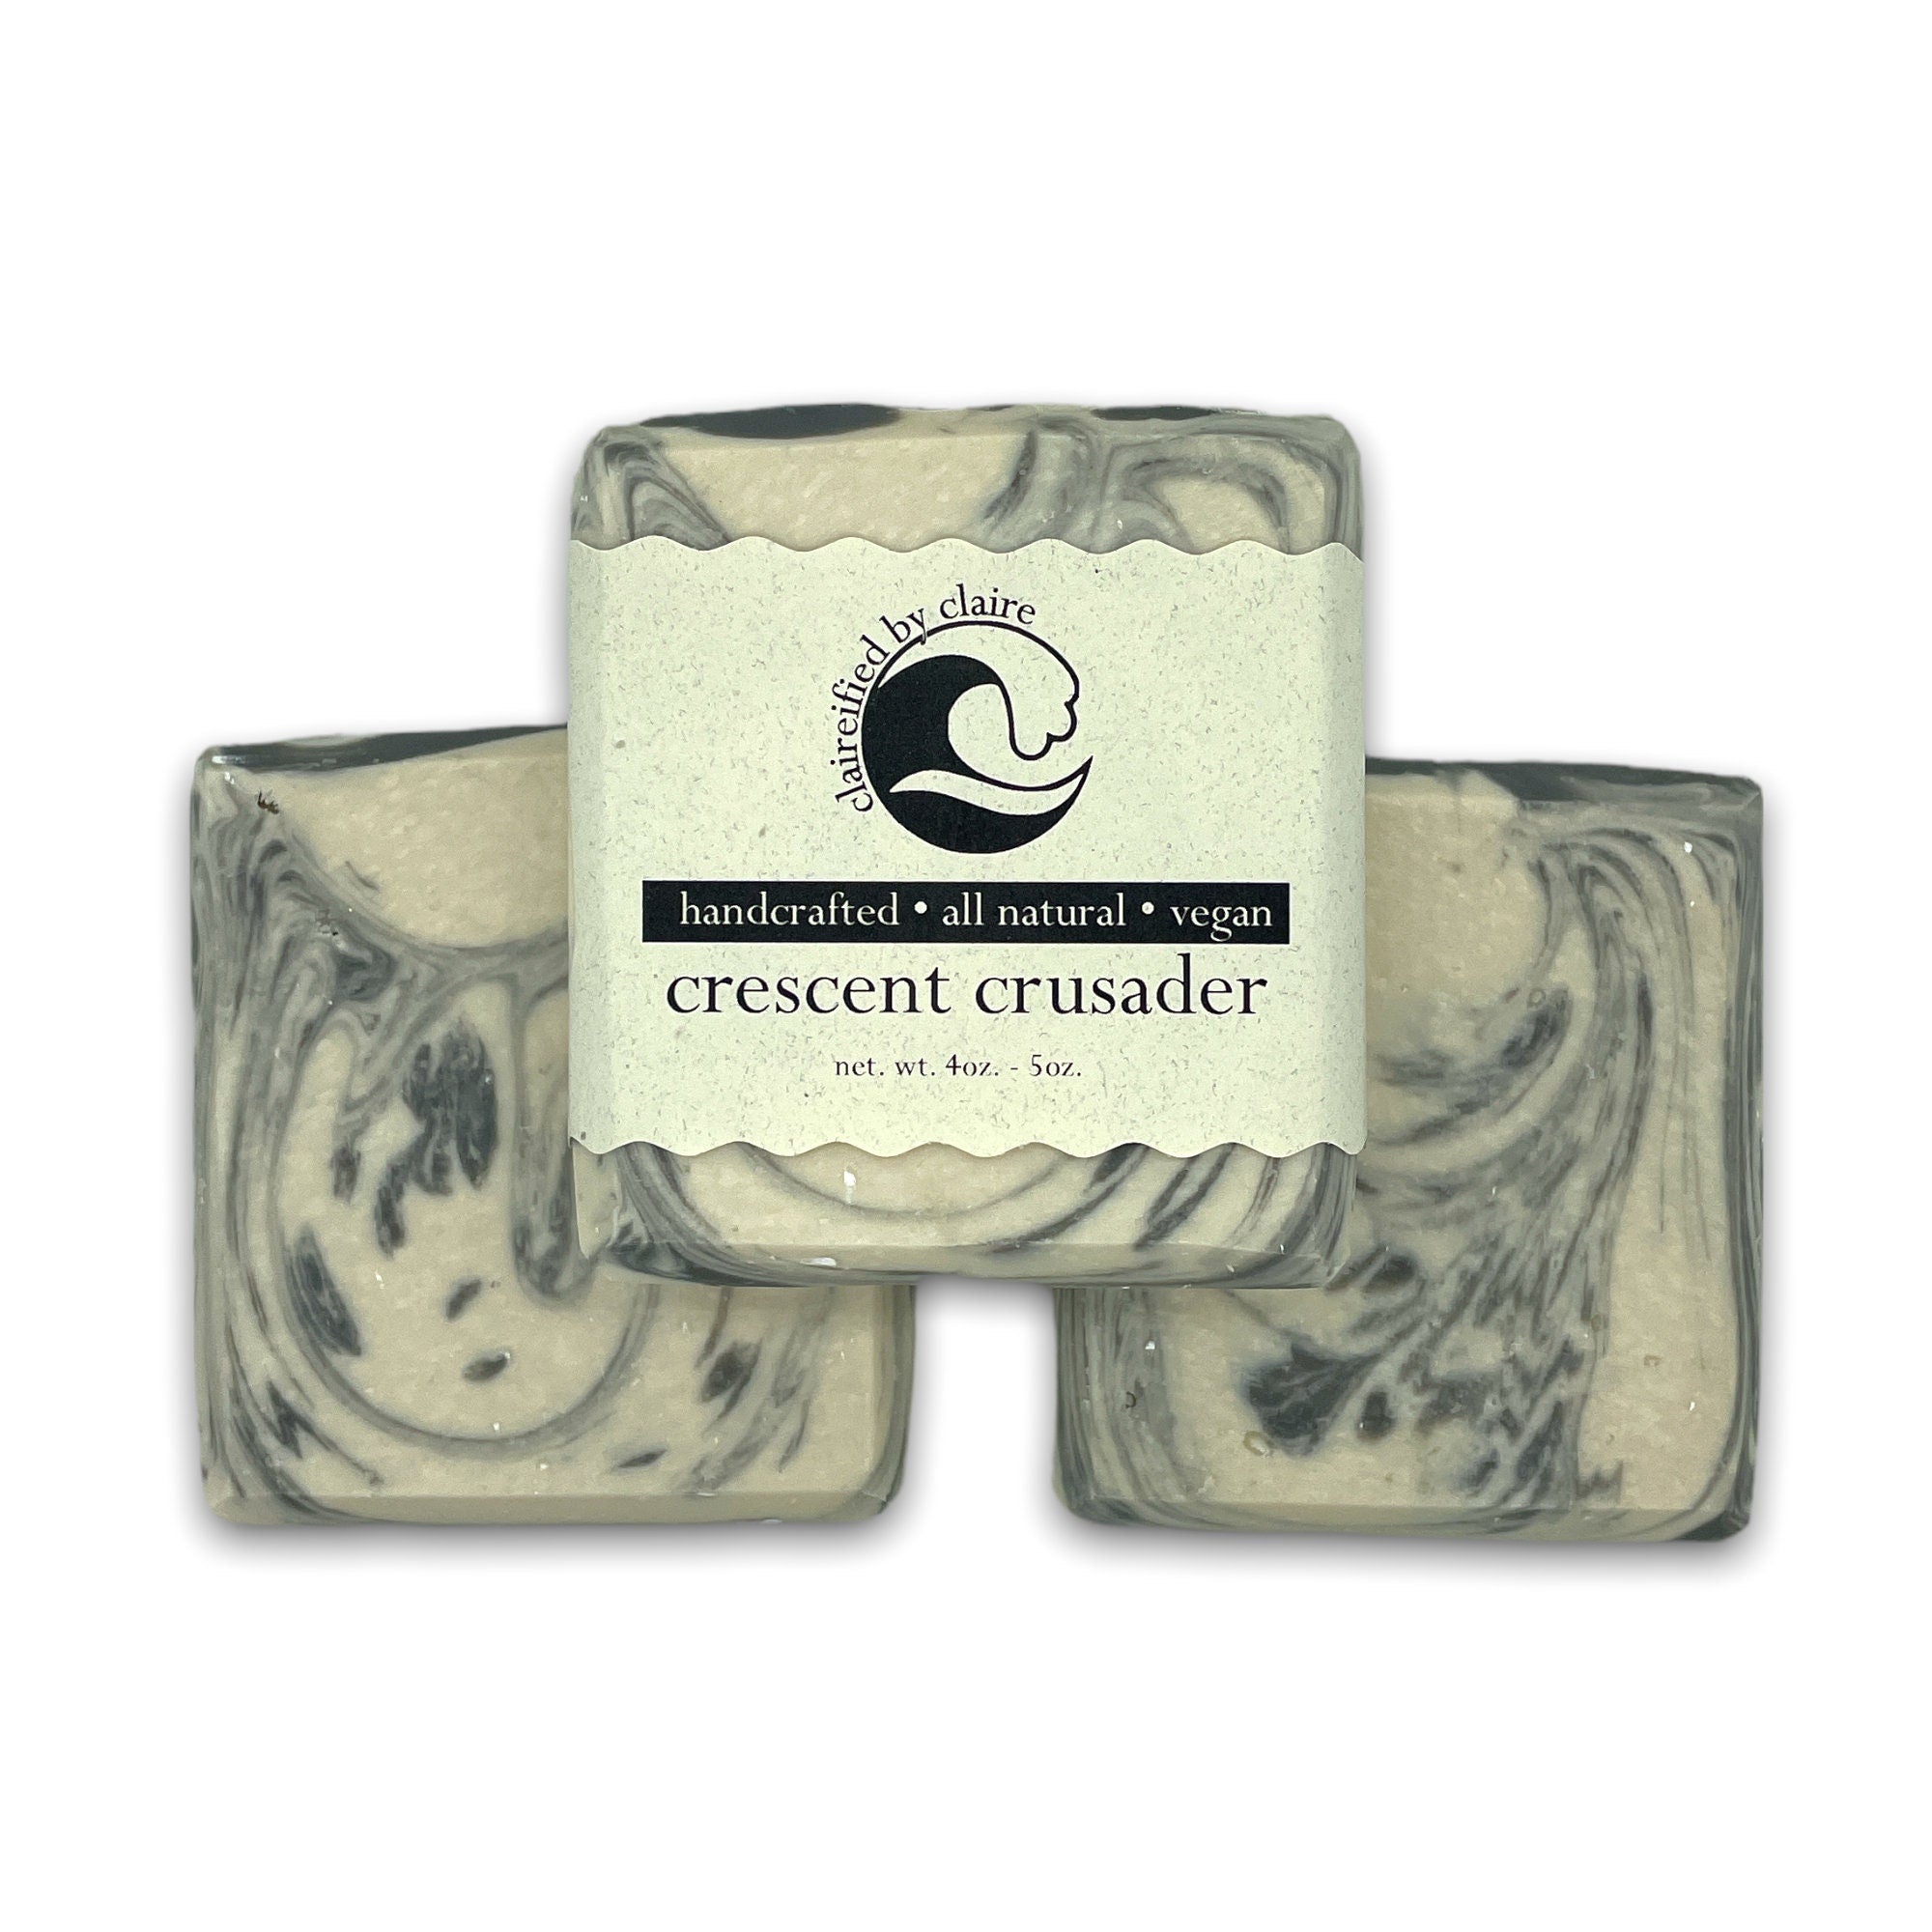 Crescent Crusader: Moon Knight Inspired Soap